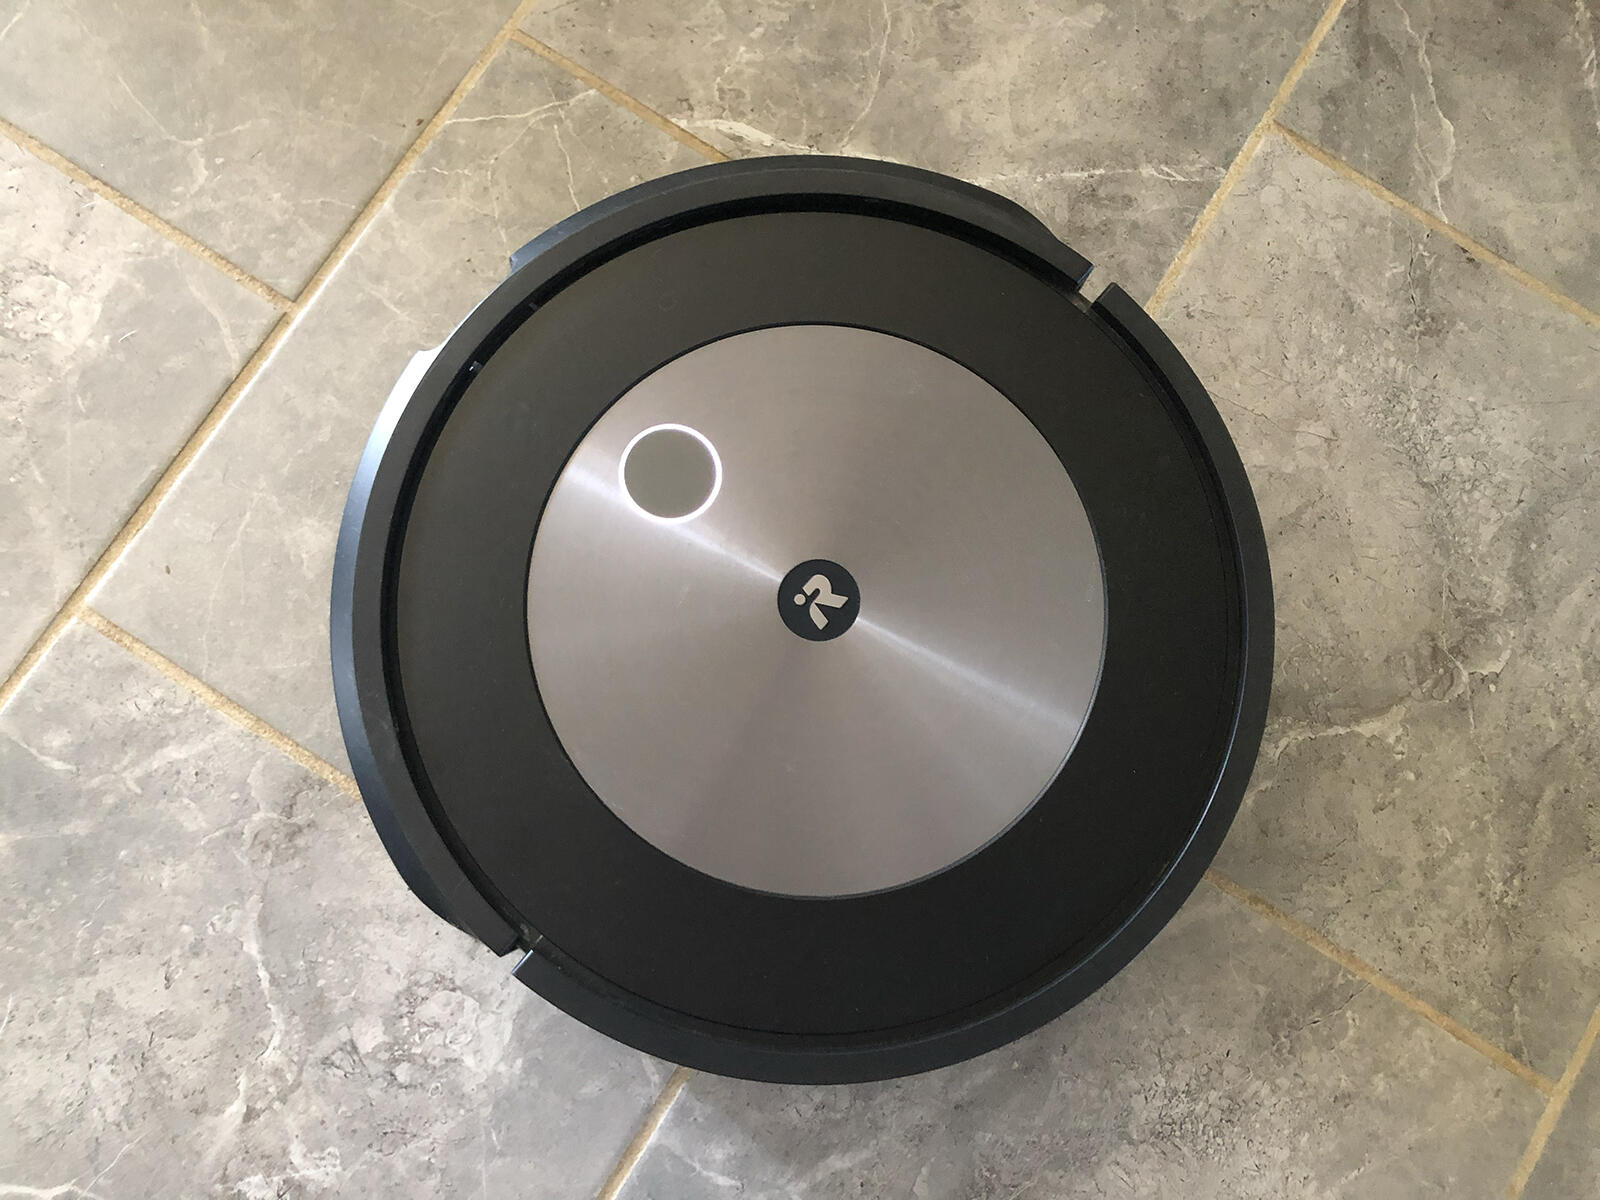 iRobot Roomba j7+ review